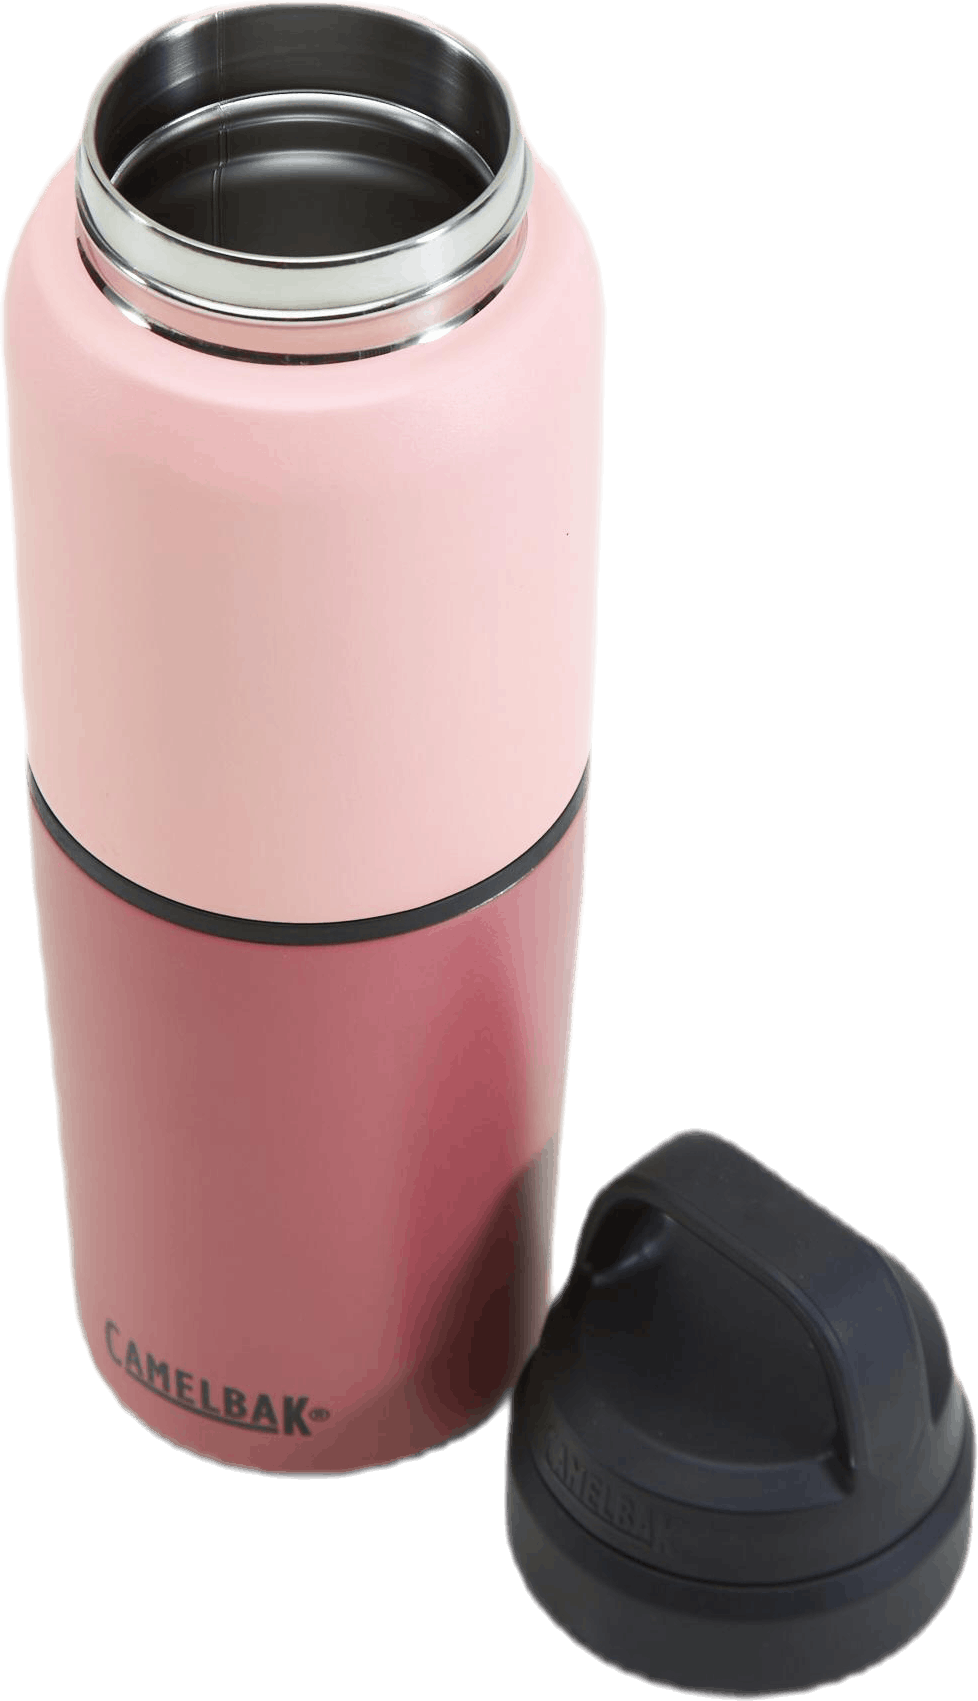 MultiBev SST Vacuum Stainless Pink